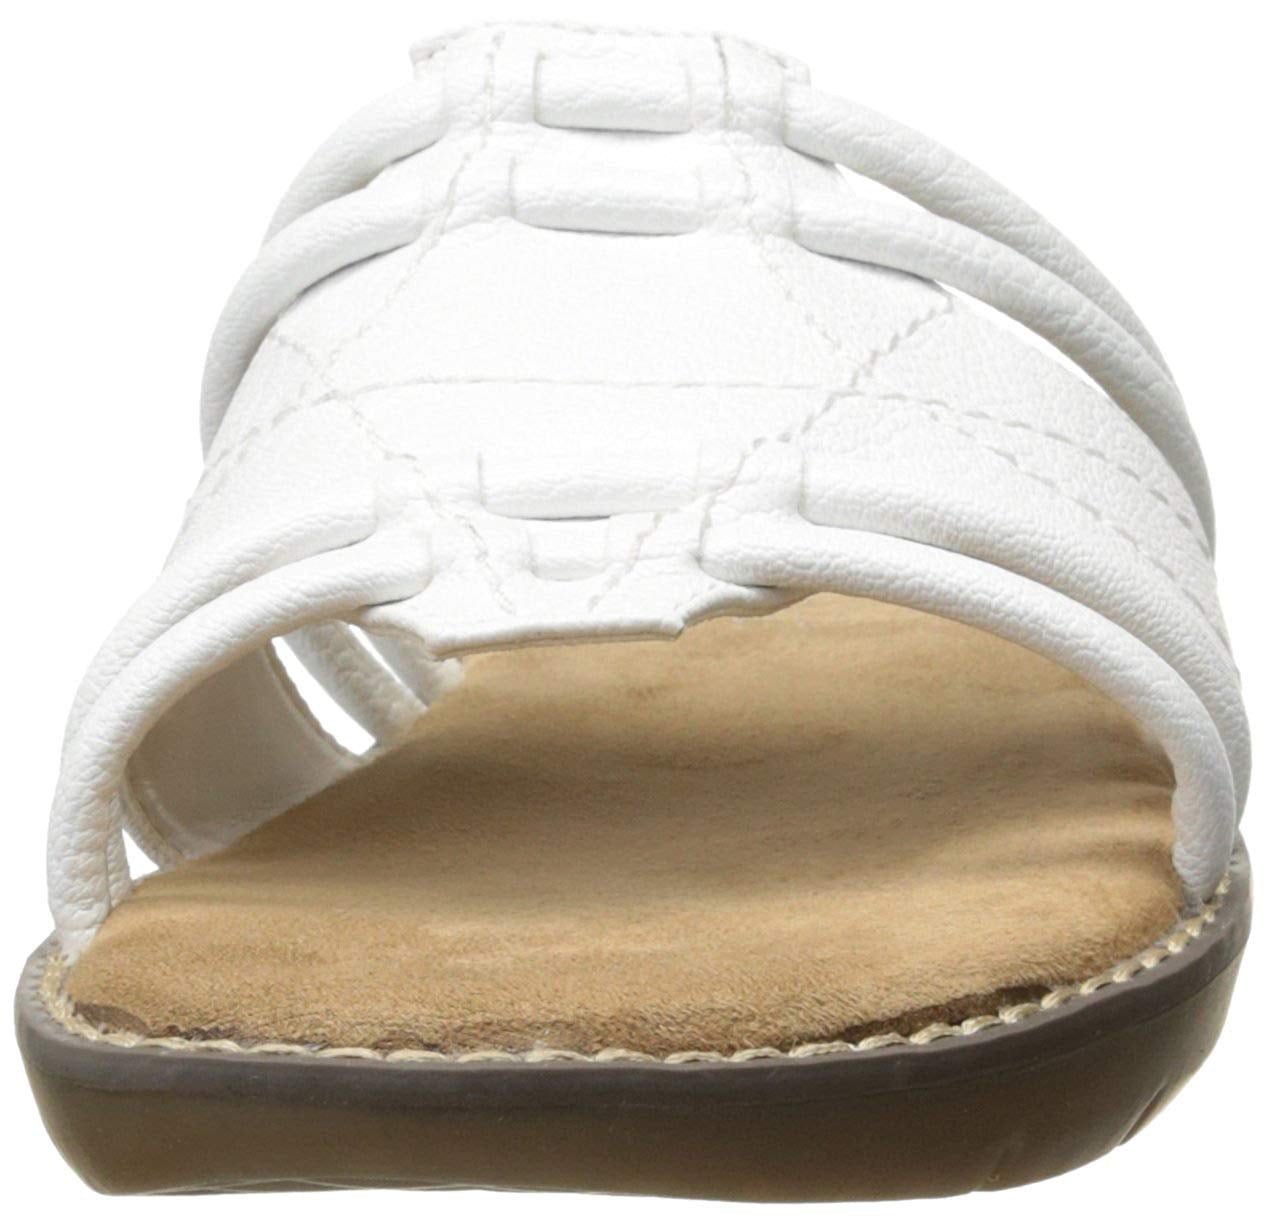 crocs capri shimmer xband sandal